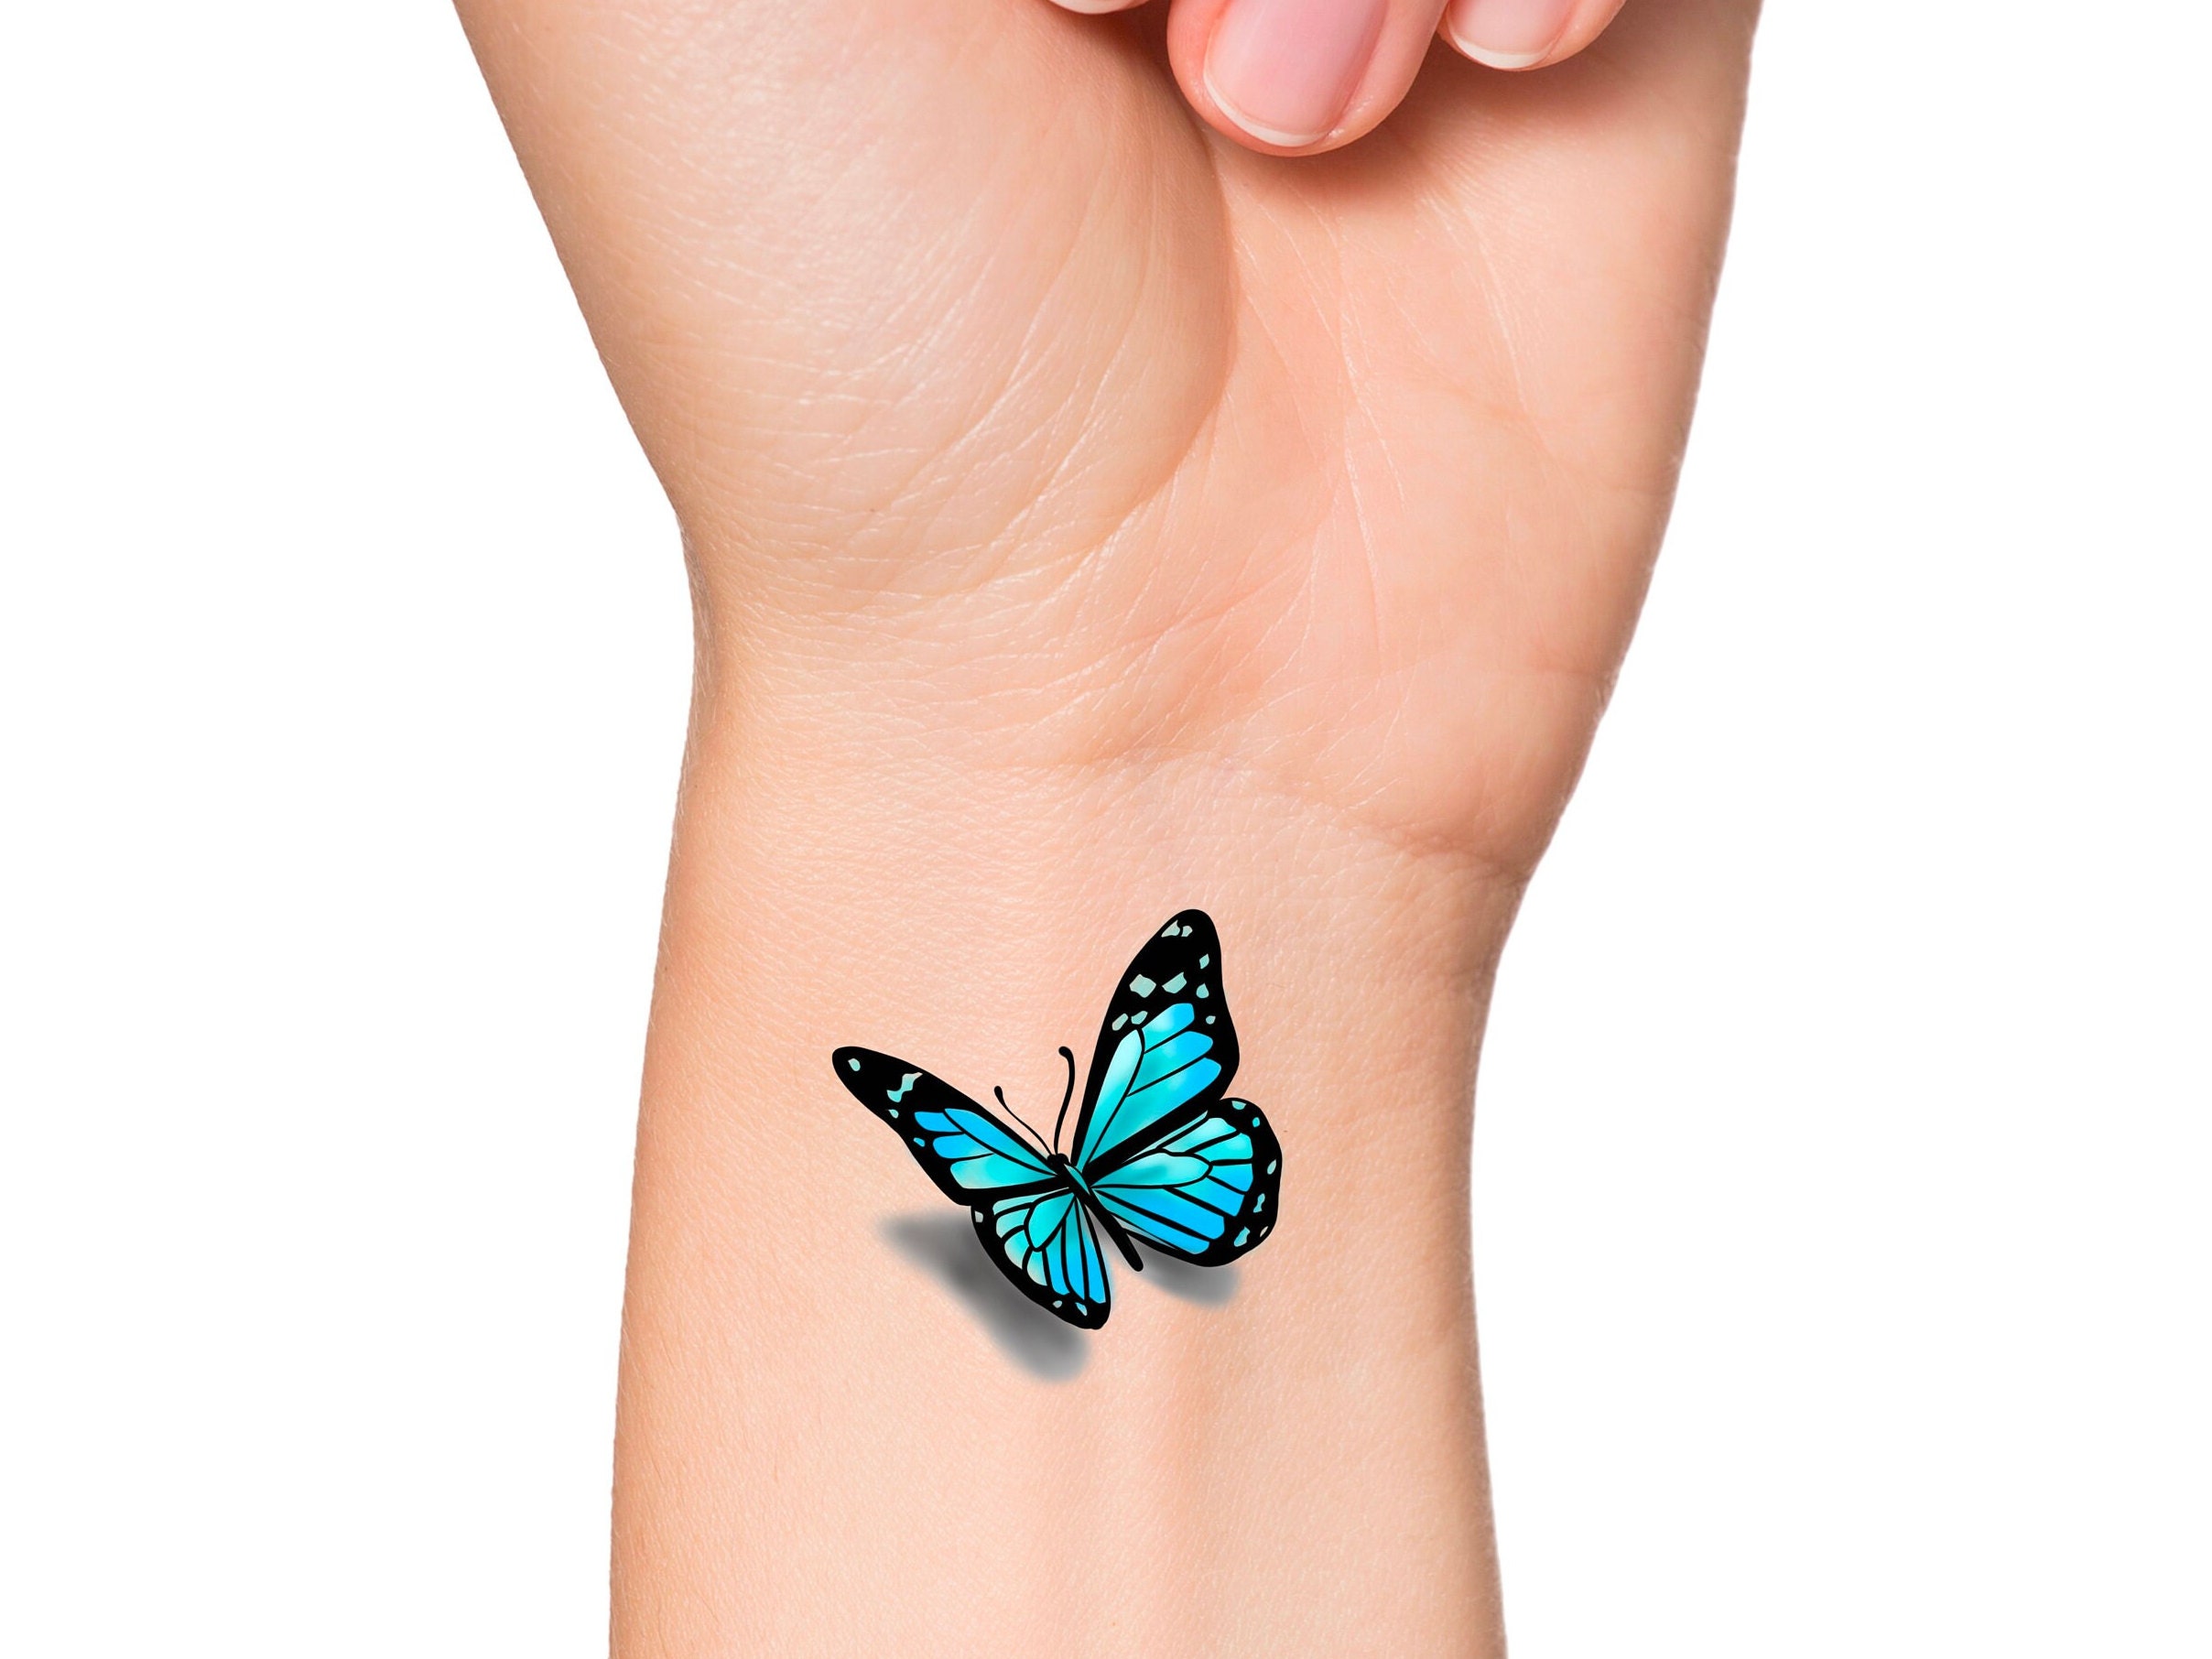 Realistic 3D Butterfly Tattoo Idea